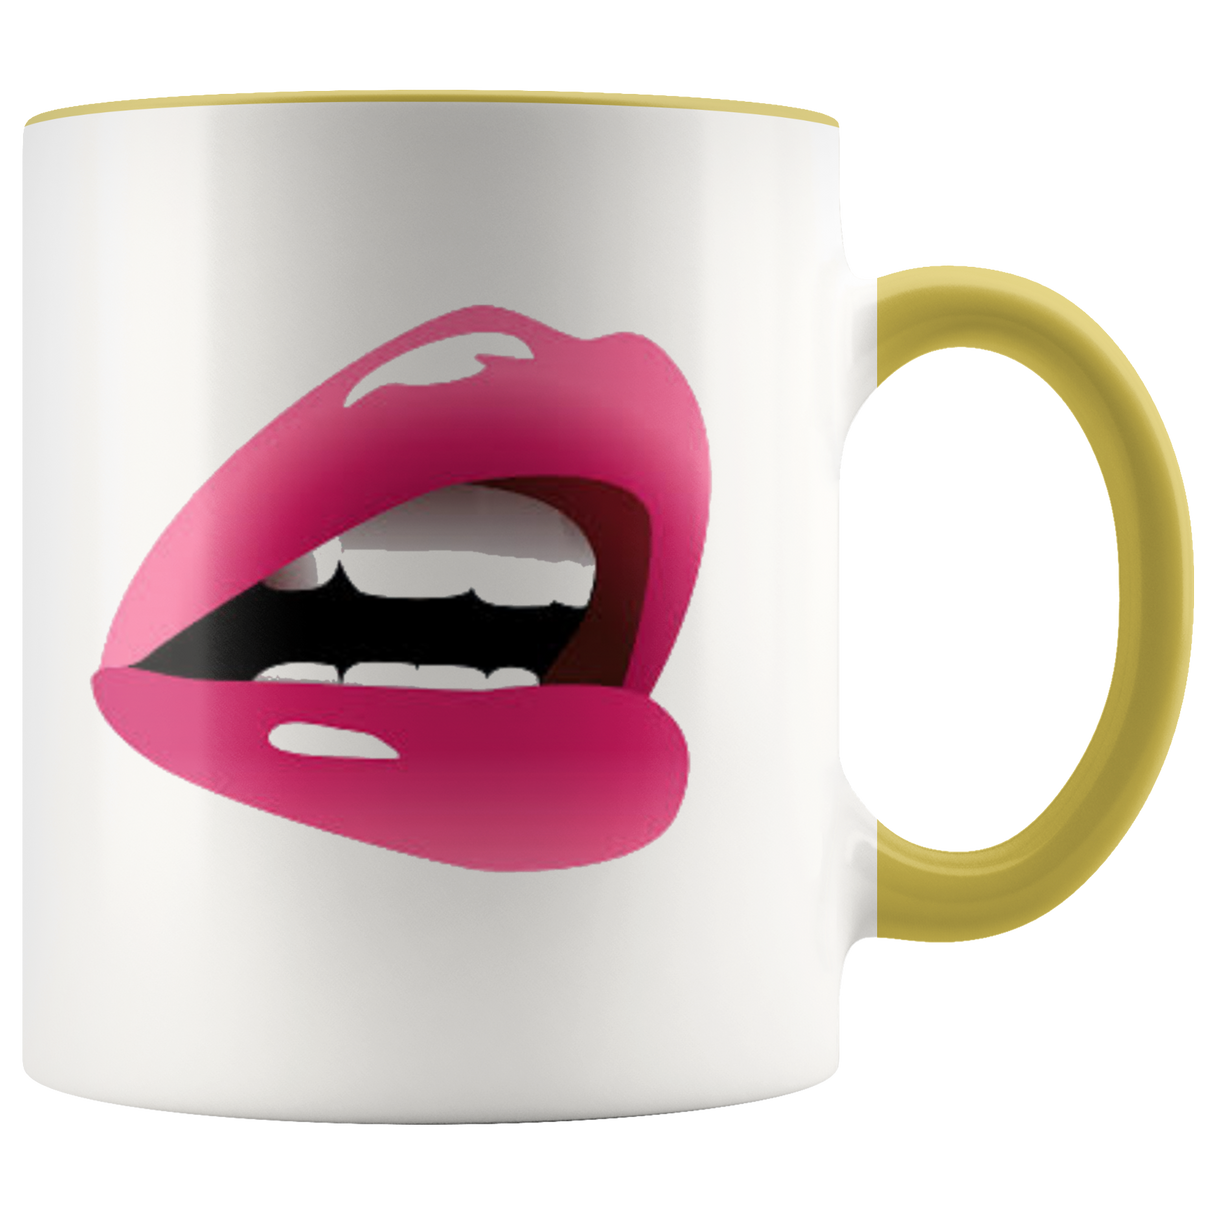 Mug Sassy Mouth Ceramic Accent Mug - Yellow | Shop Sassy Chick